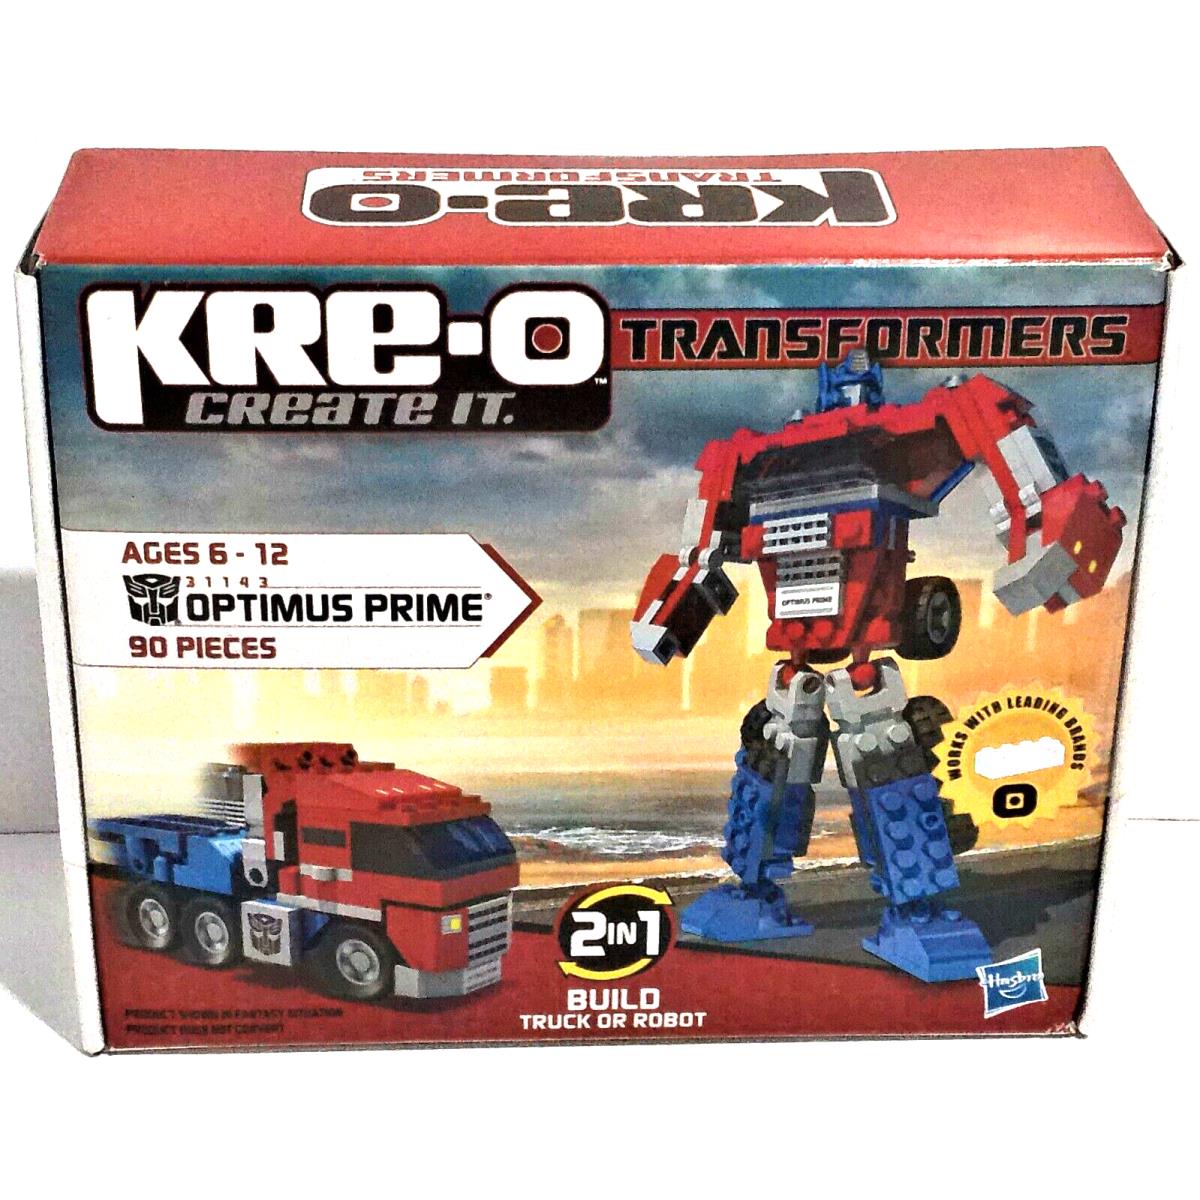 Lego Kre-o Create IT Transformers 31143 Optimus Prime Truck or Robot Misb